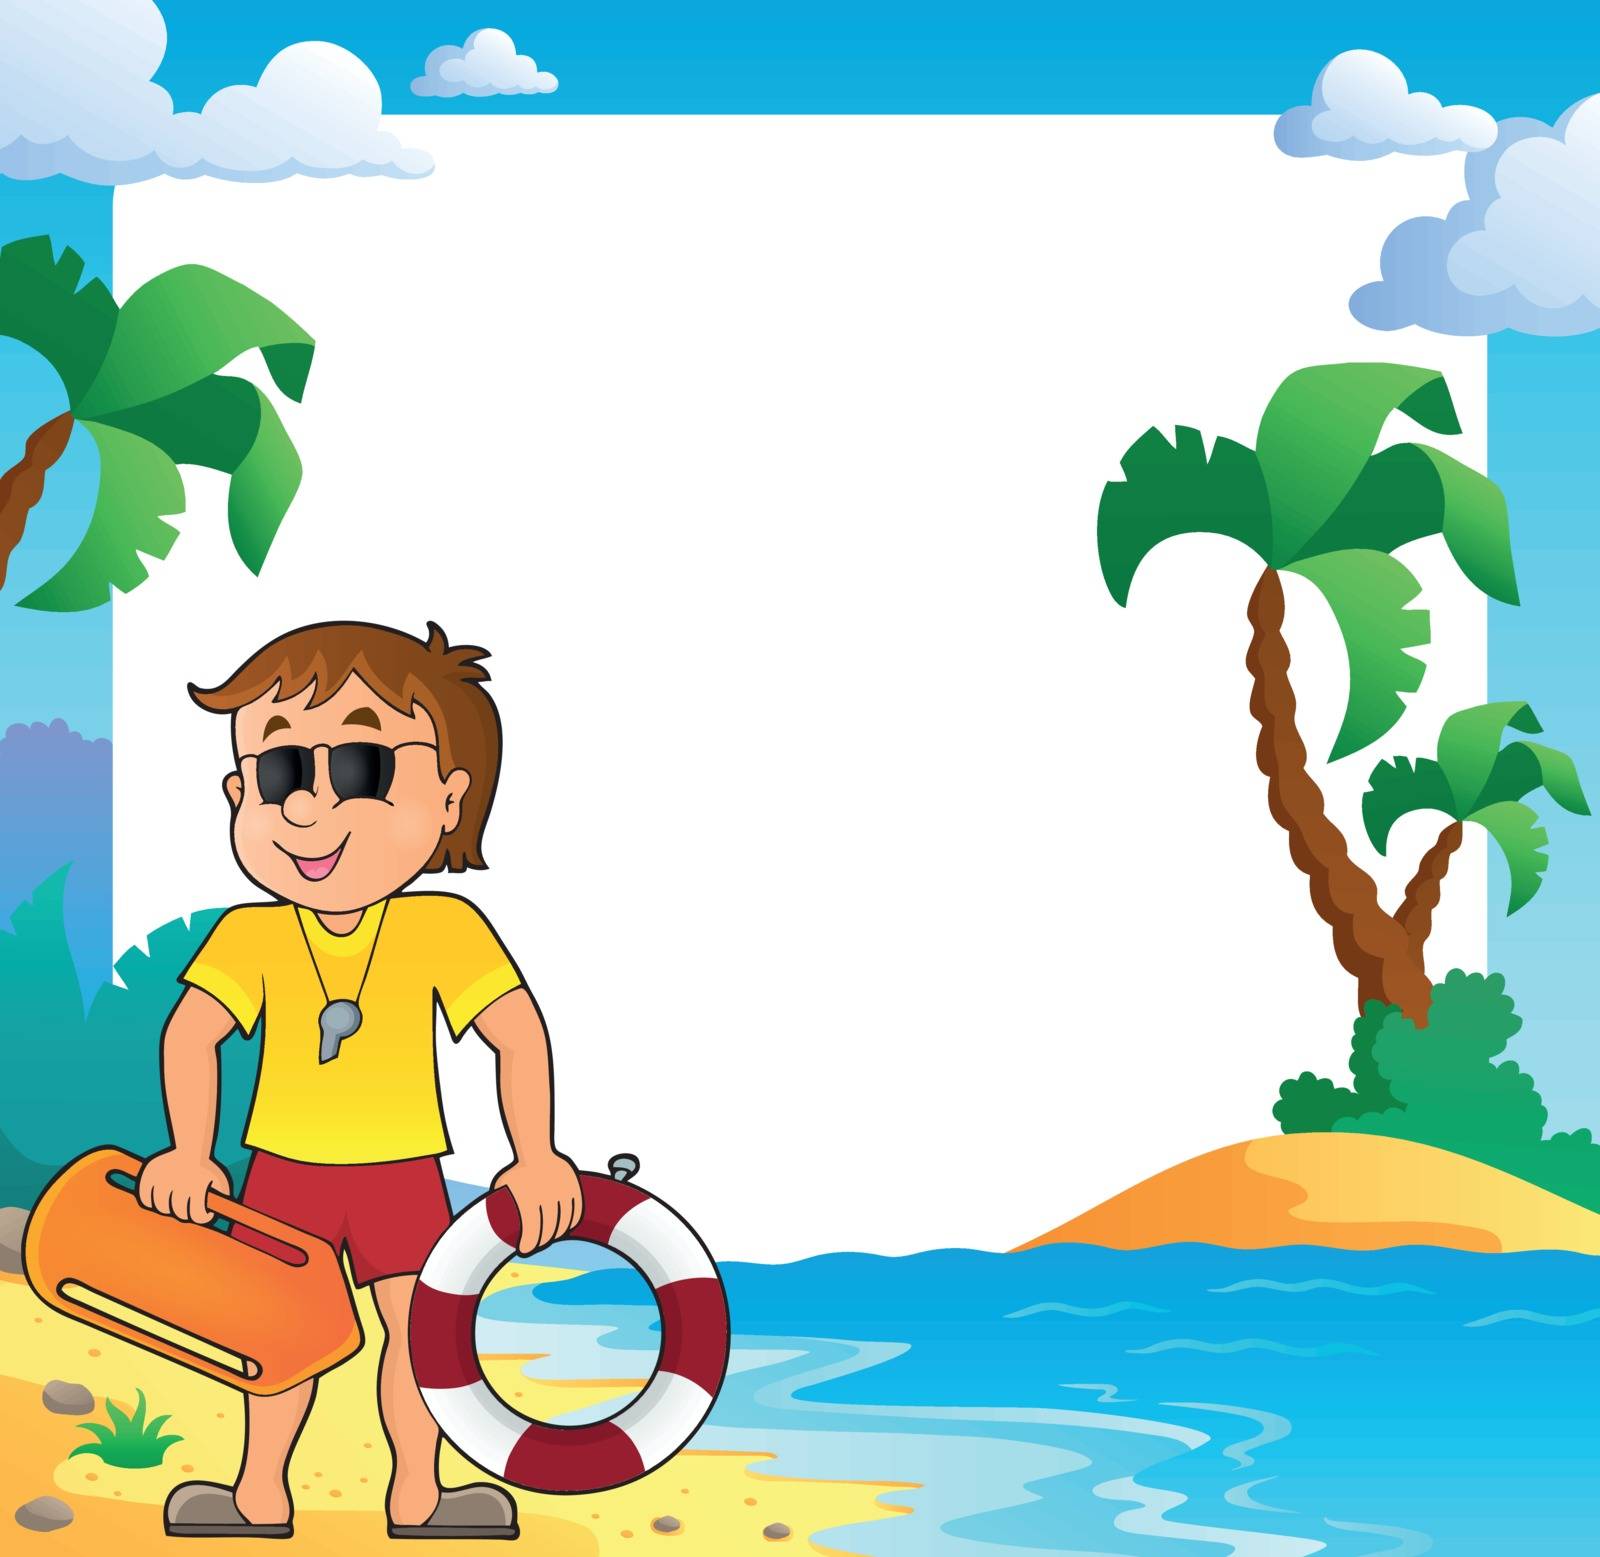 Beach theme frame with life guard - eps10 vector illustration.